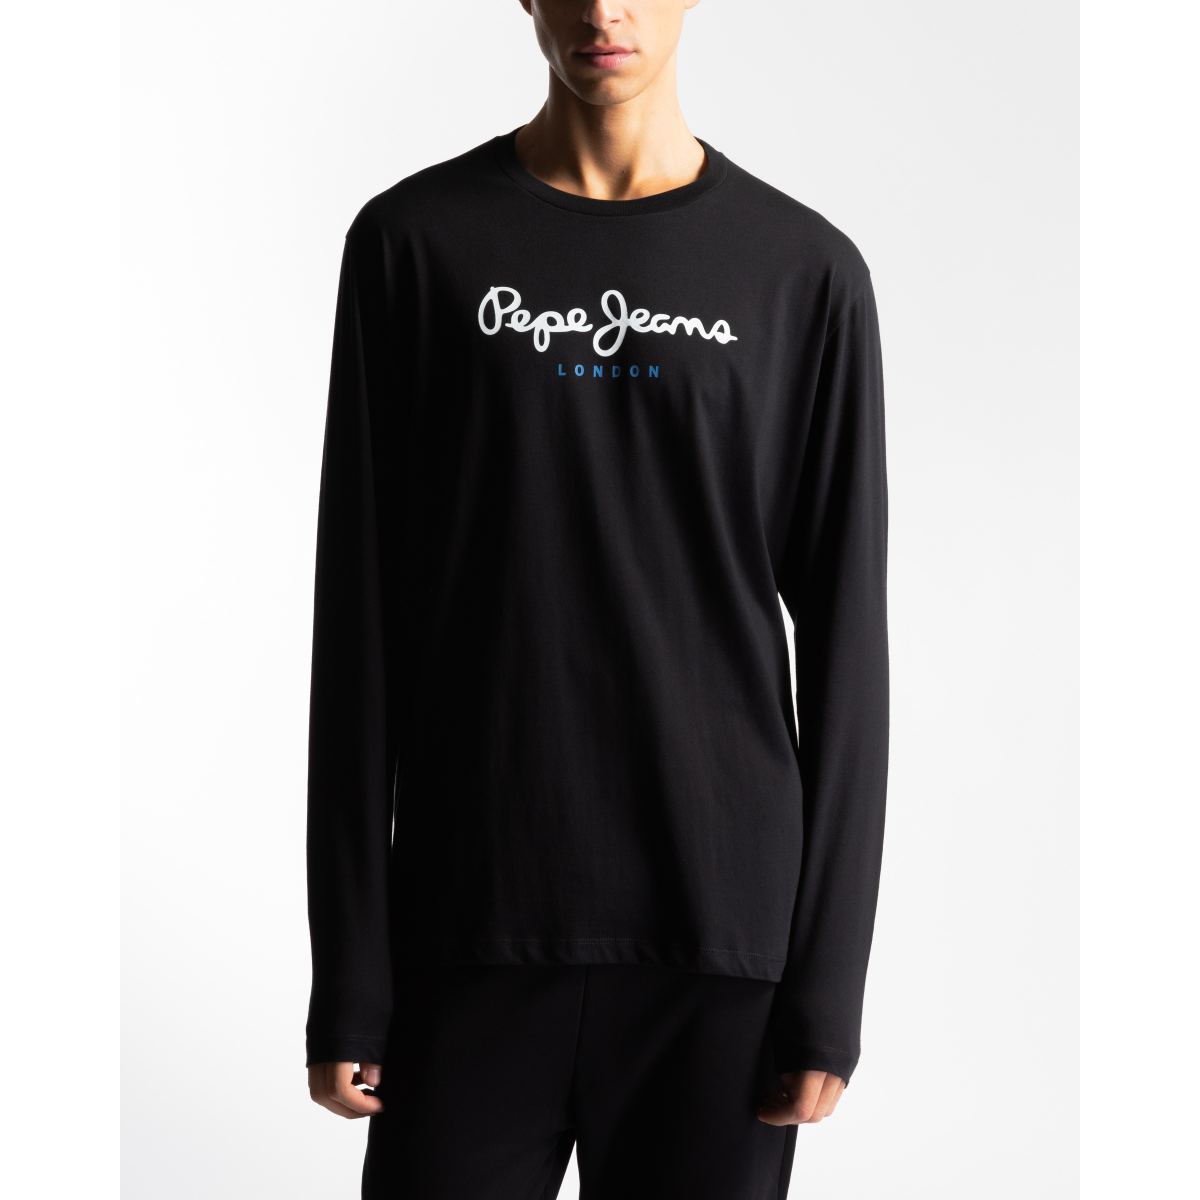 - 300-508209-01 Jeans London Store PROF Black Pepe Eggo Sweatshirt | Portobello Online